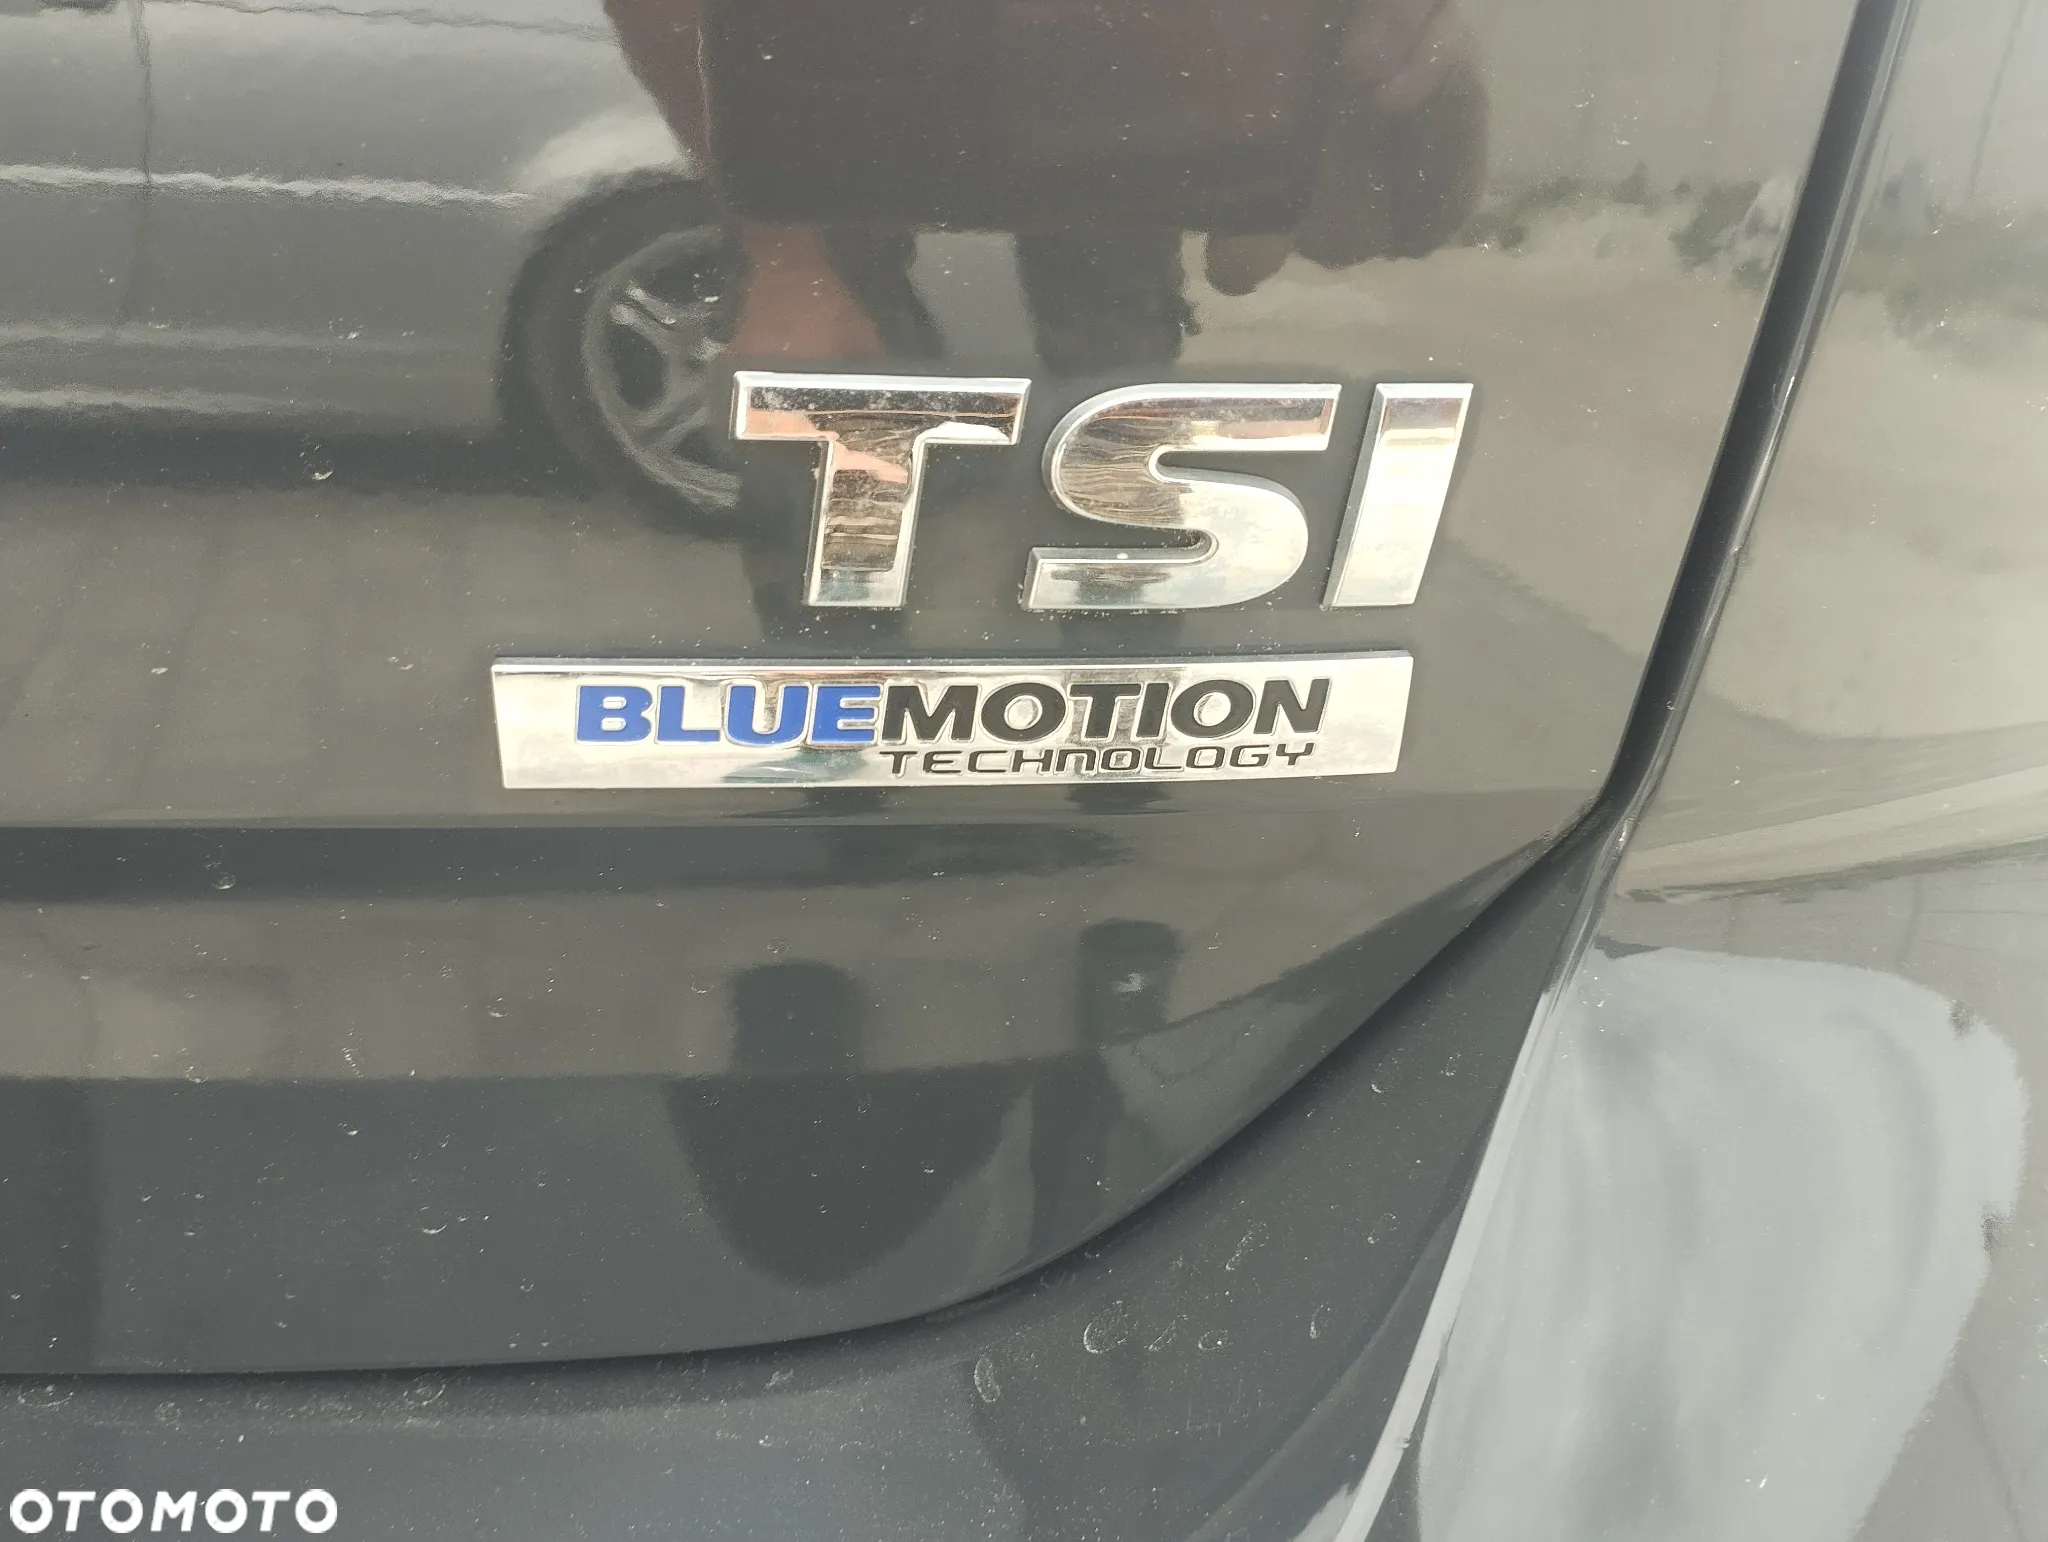 Volkswagen Golf 1.2 TSI BlueMotion Technology Comfortline - 10